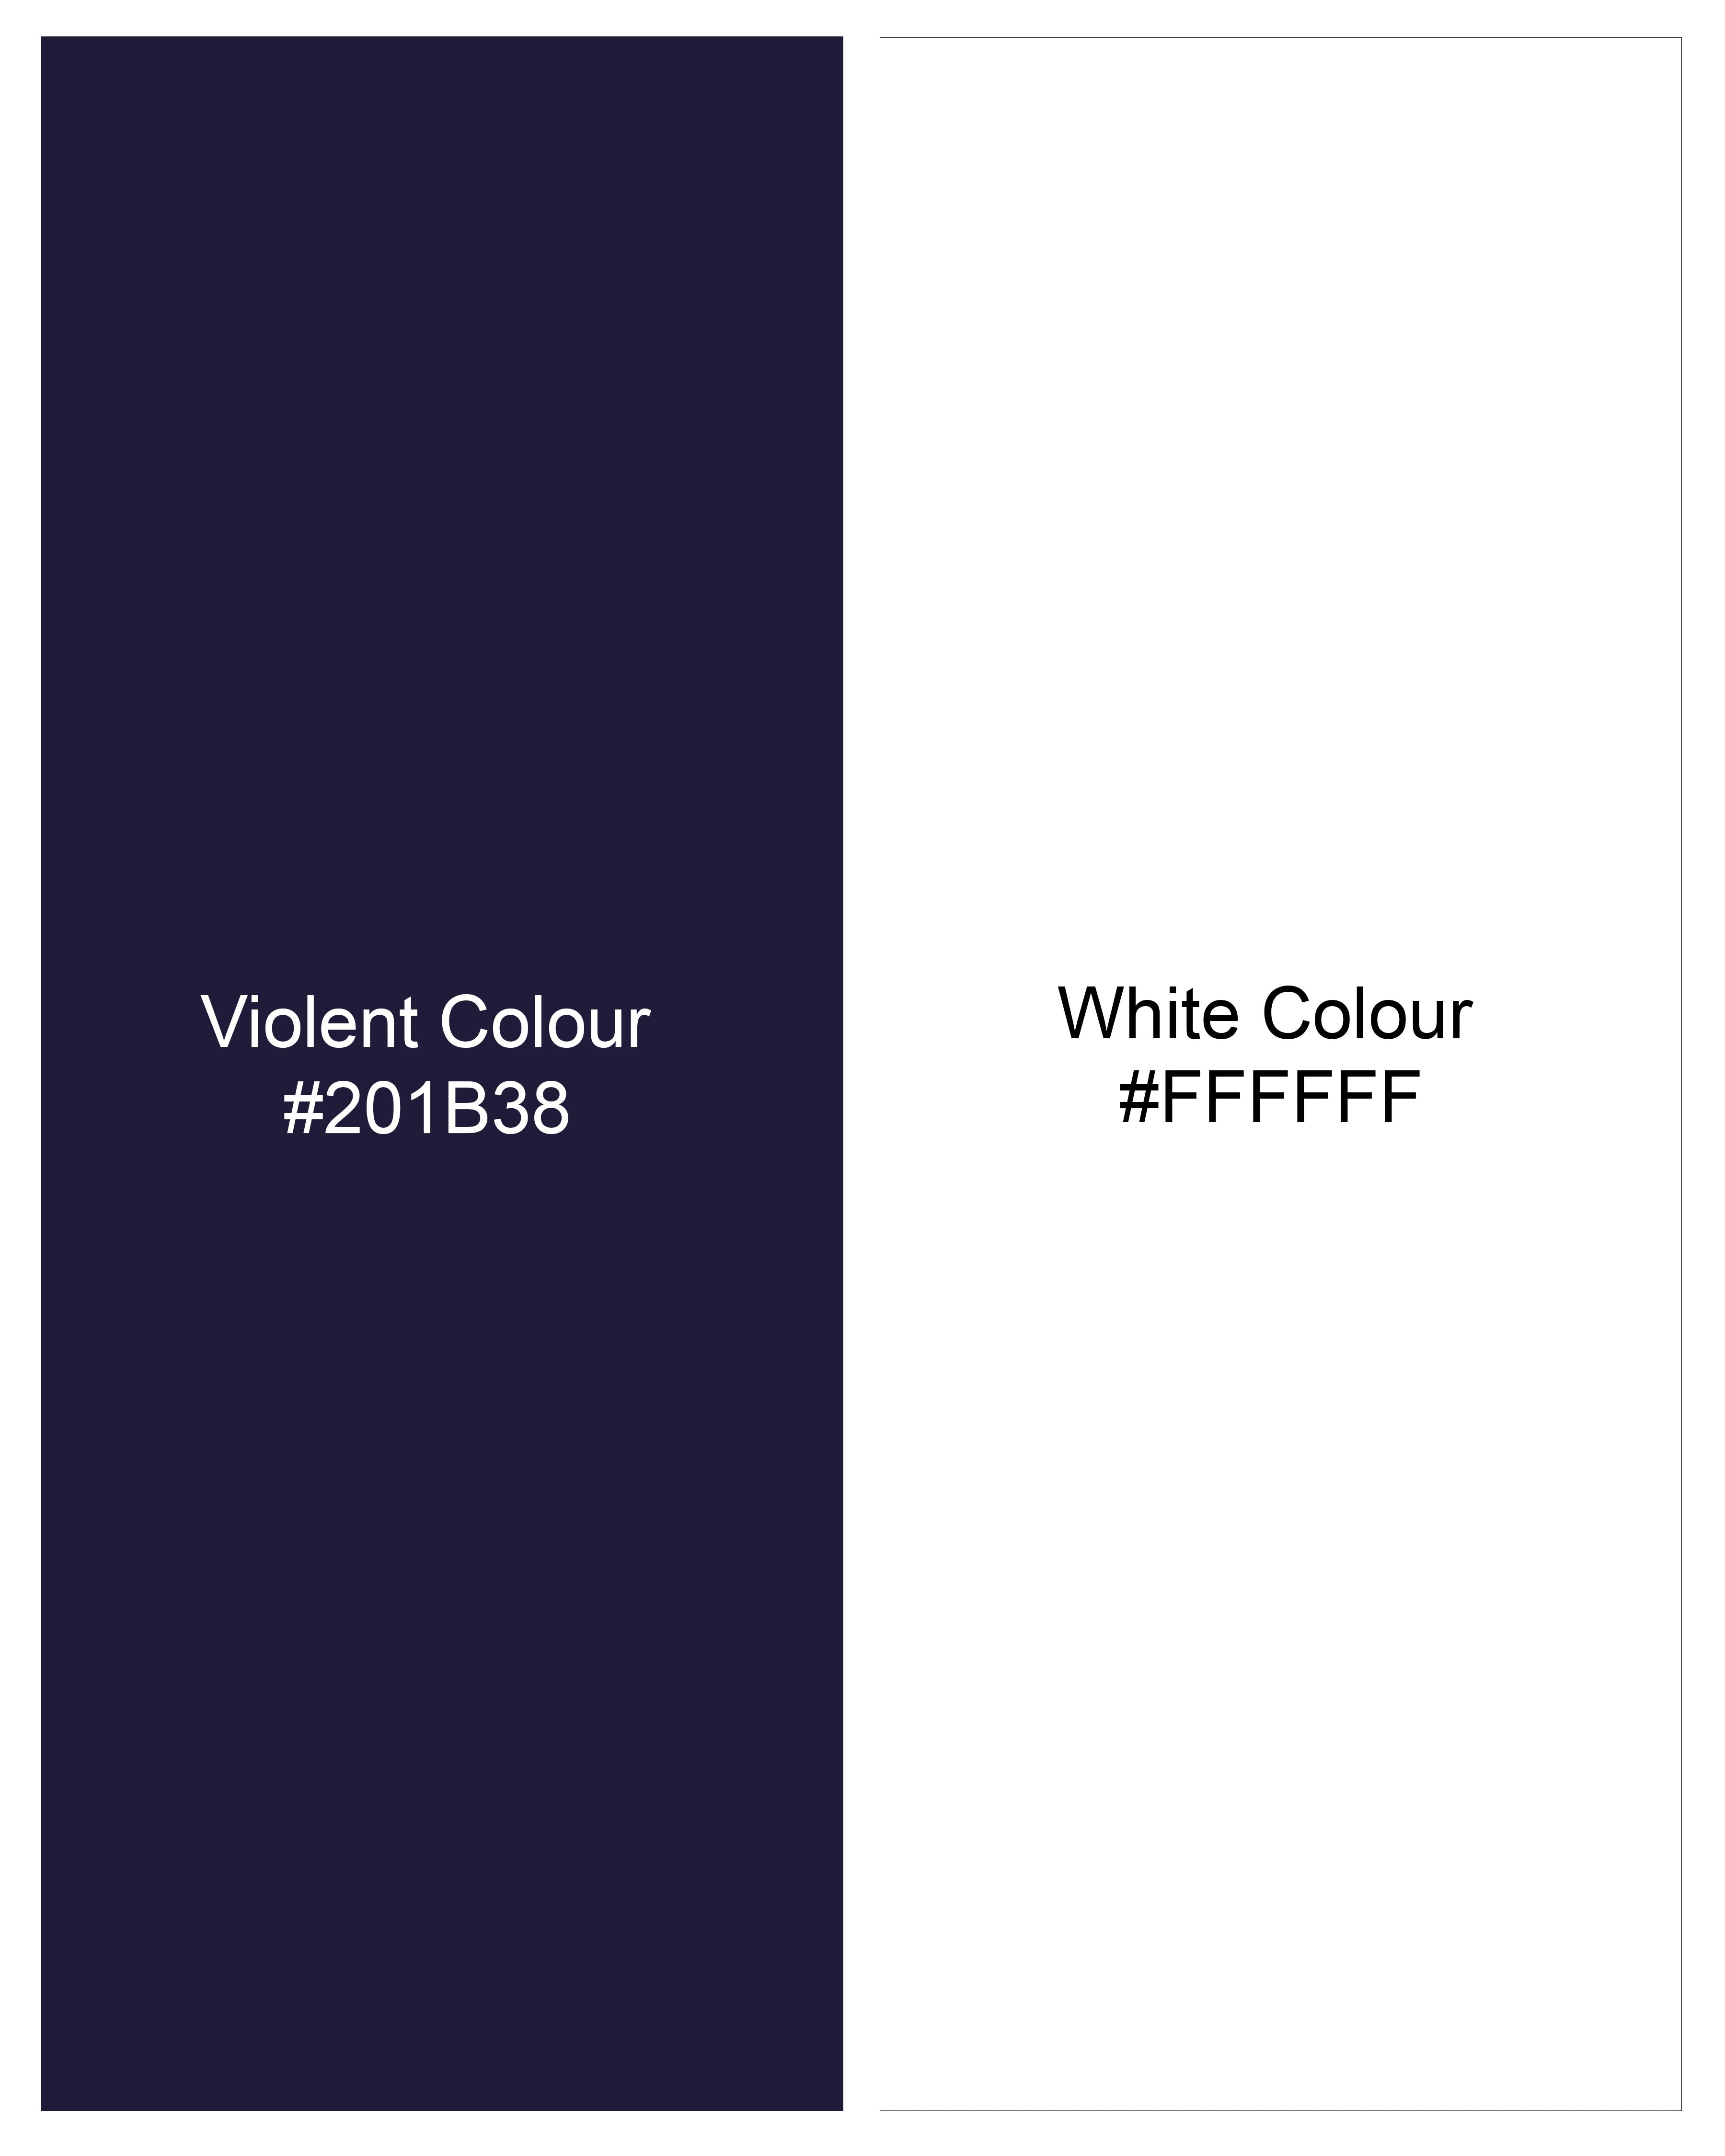 Violent Blue with White Windowpane Dobby Texture Premium Giza Cotton Shirt 9124-38,9124-H-38,9124-39,9124-H-39,9124-40,9124-H-40,9124-42,9124-H-42,9124-44,9124-H-44,9124-46,9124-H-46,9124-48,9124-H-48,9124-50,9124-H-50,9124-52,9124-H-52